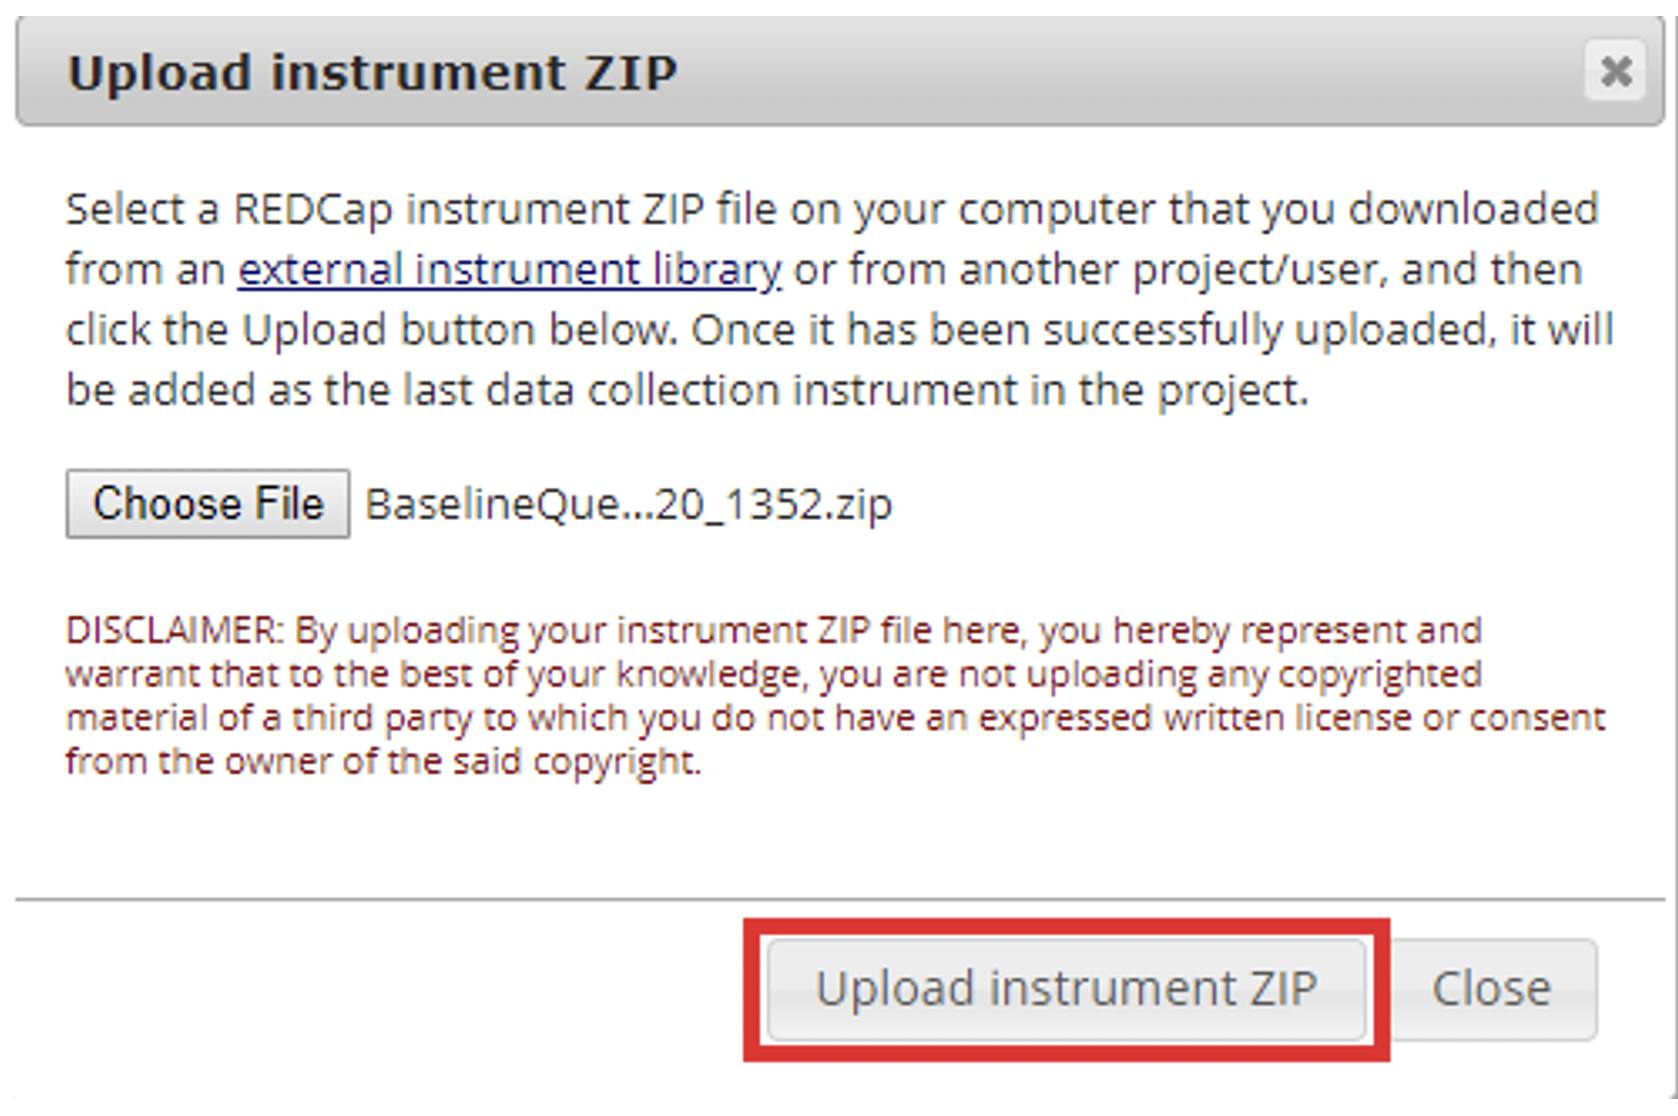 Upload Instrument ZIP screenshot with 'Upload Instrument ZIP' button highlighted.